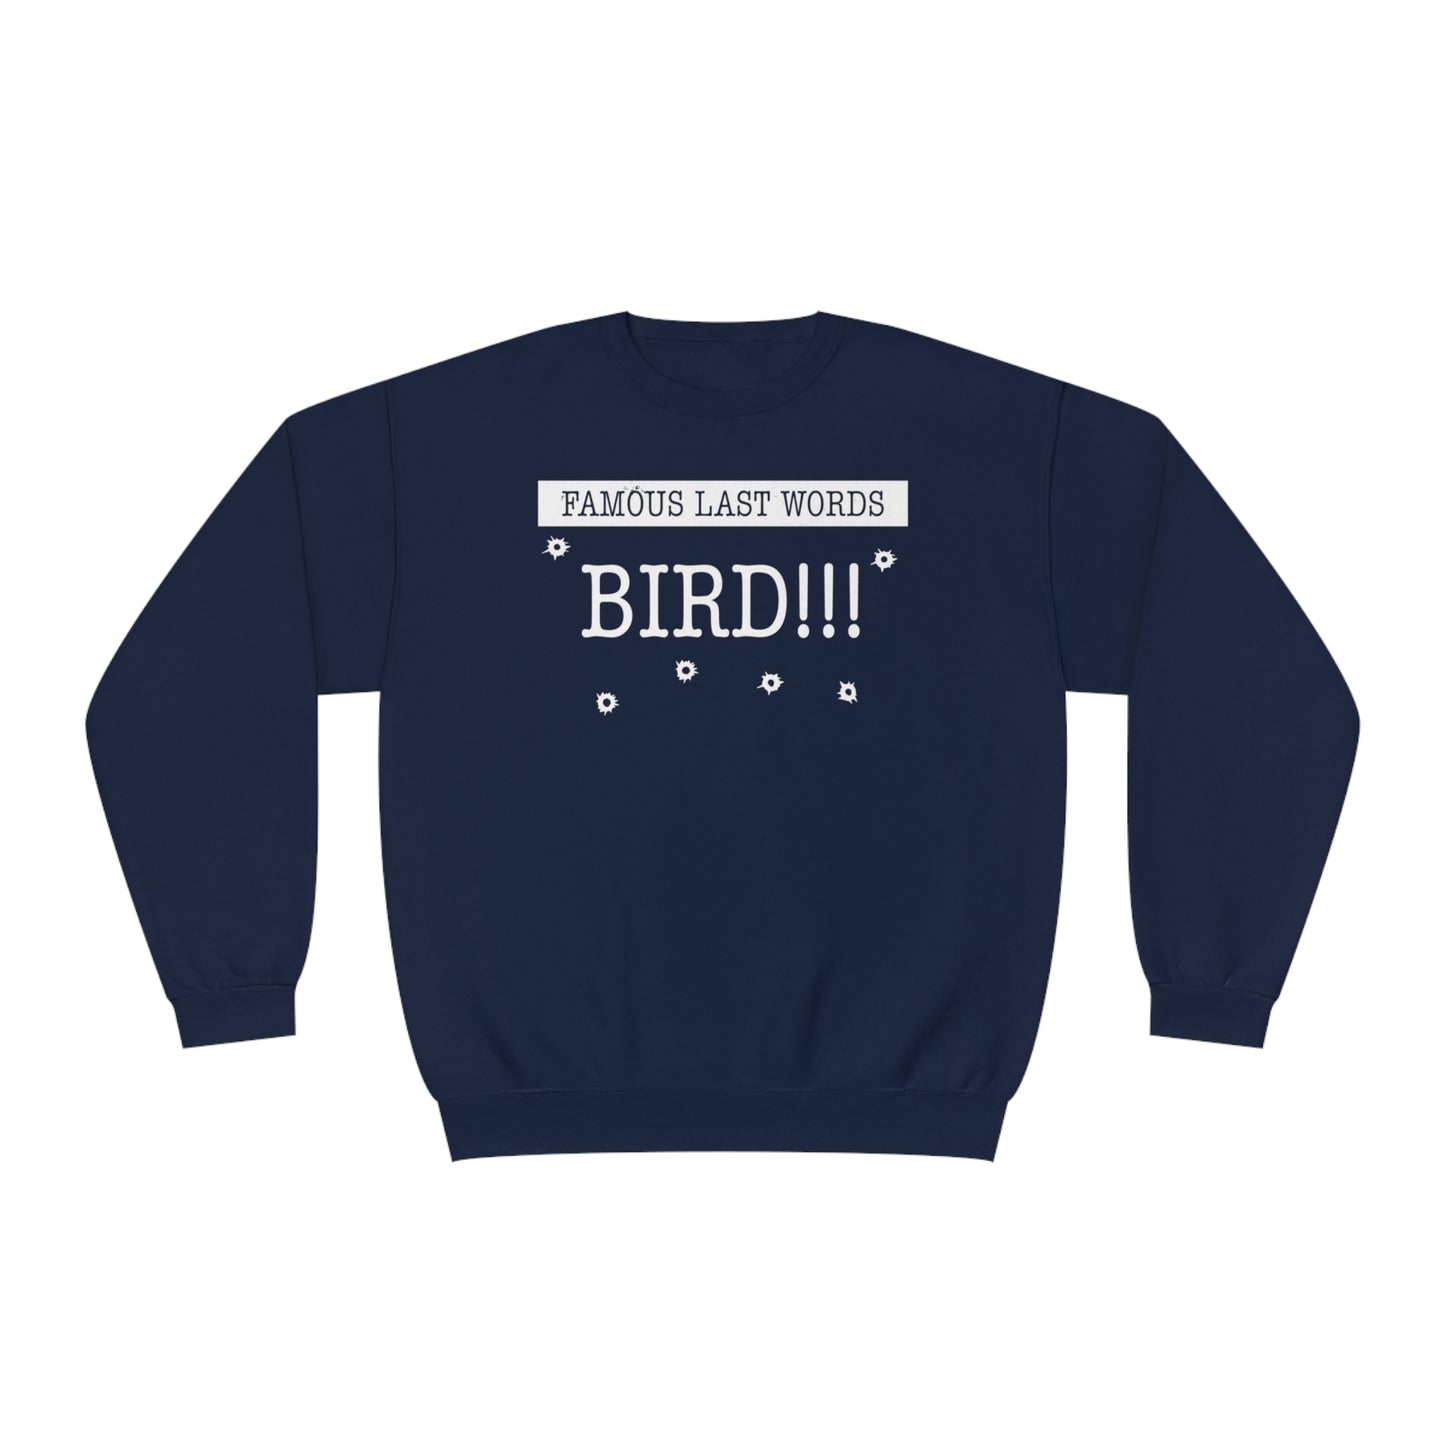 FLW "Bird!!!" Sweatshirt